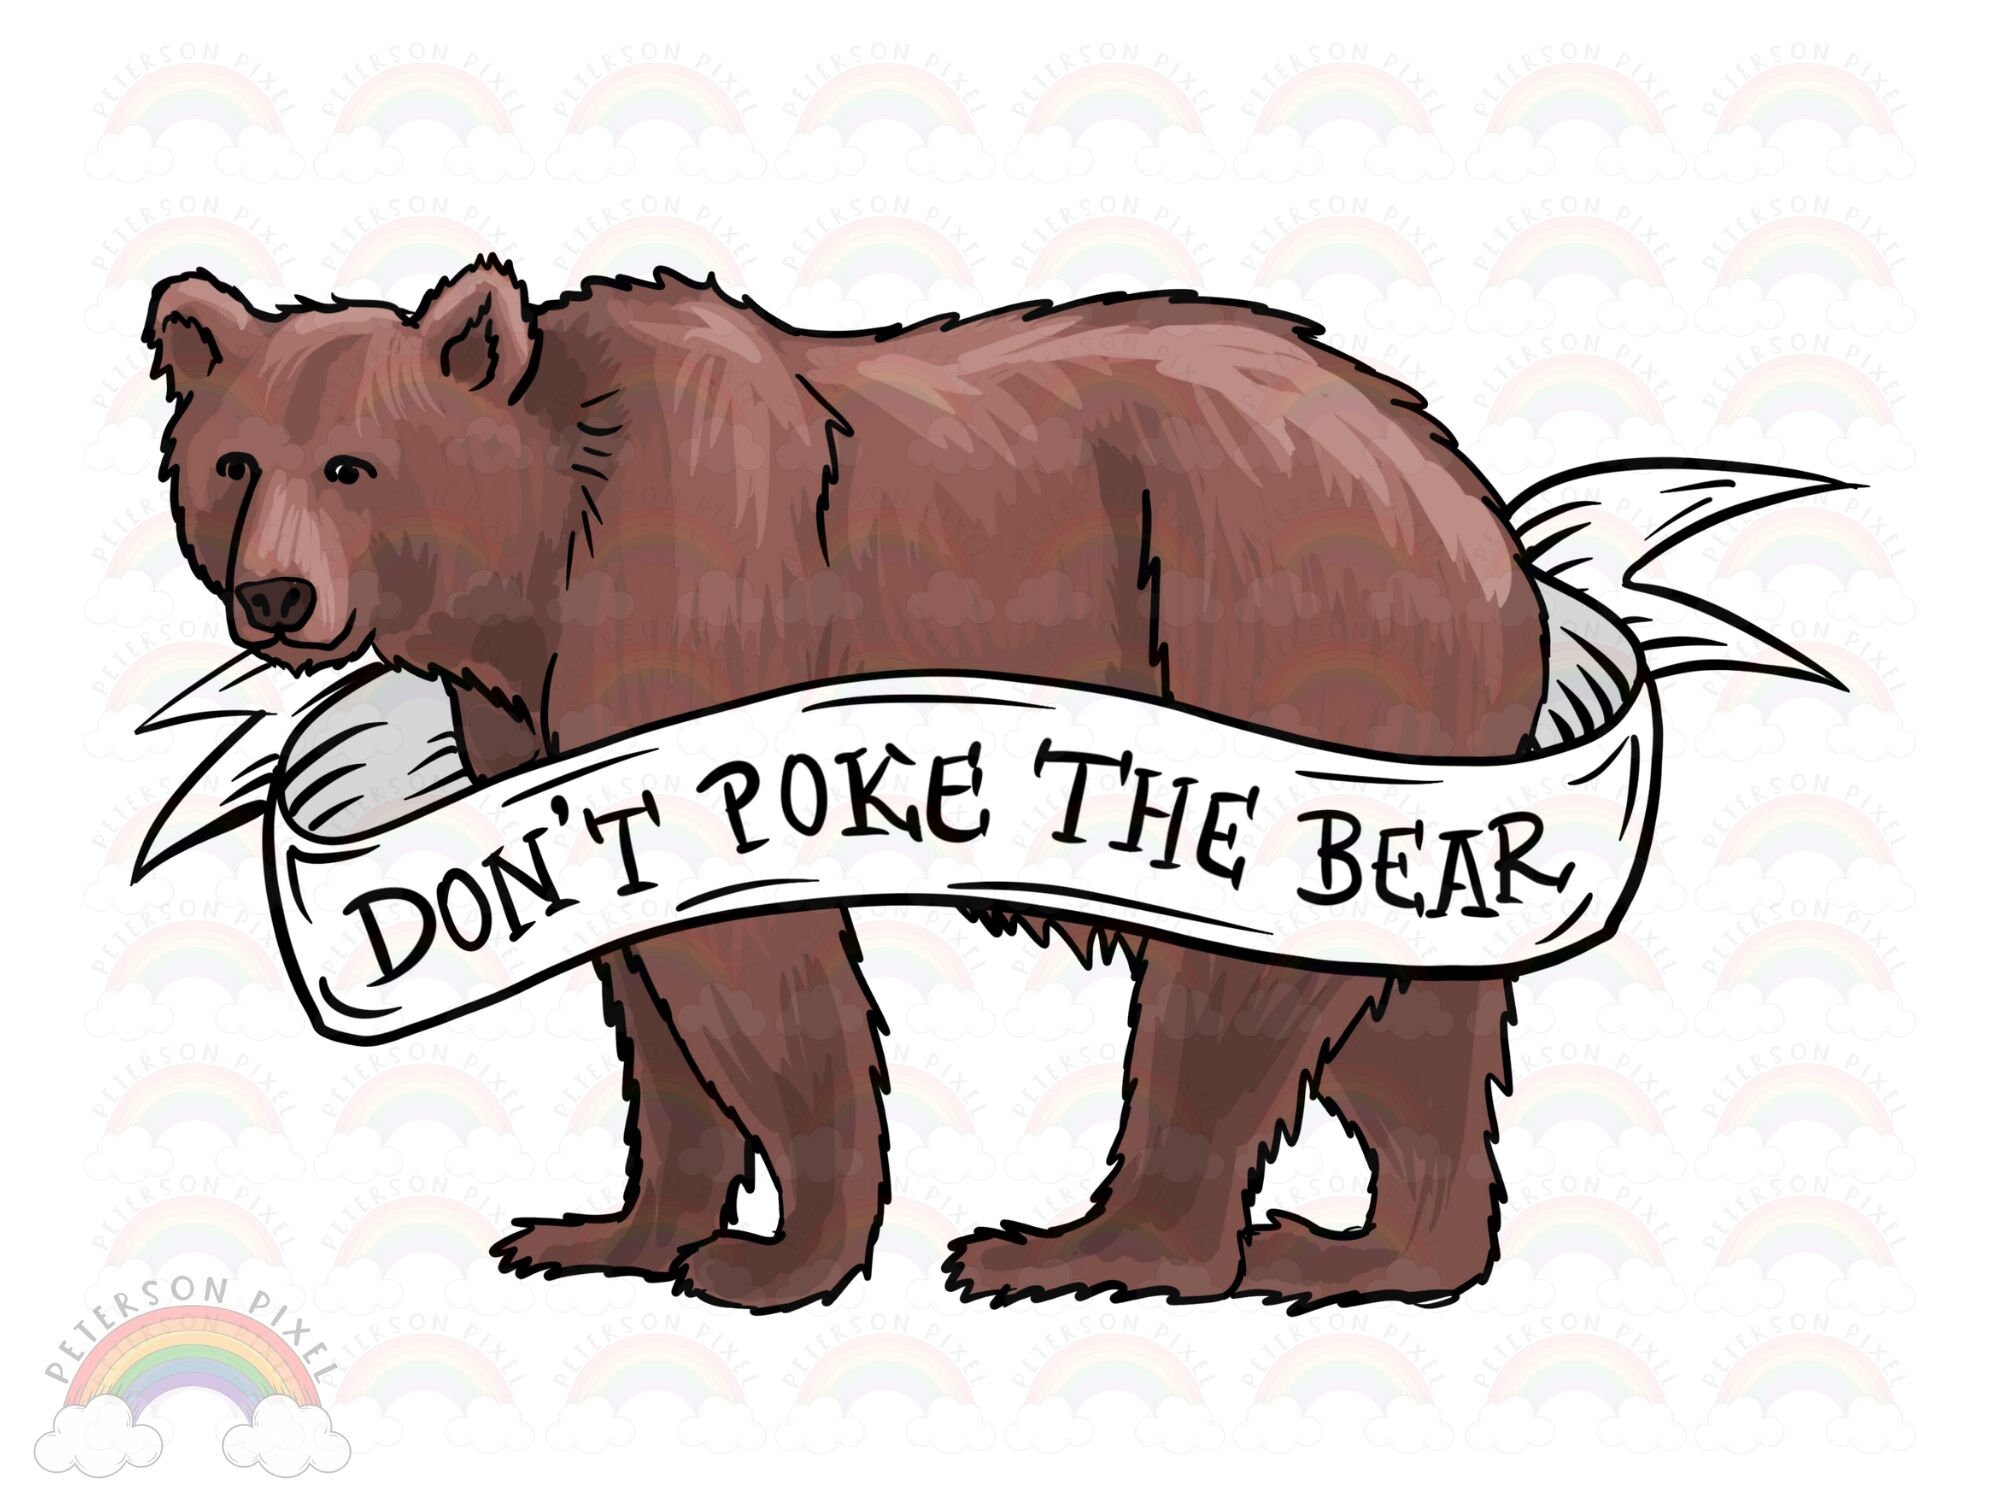 D'Ont Poke the Bear